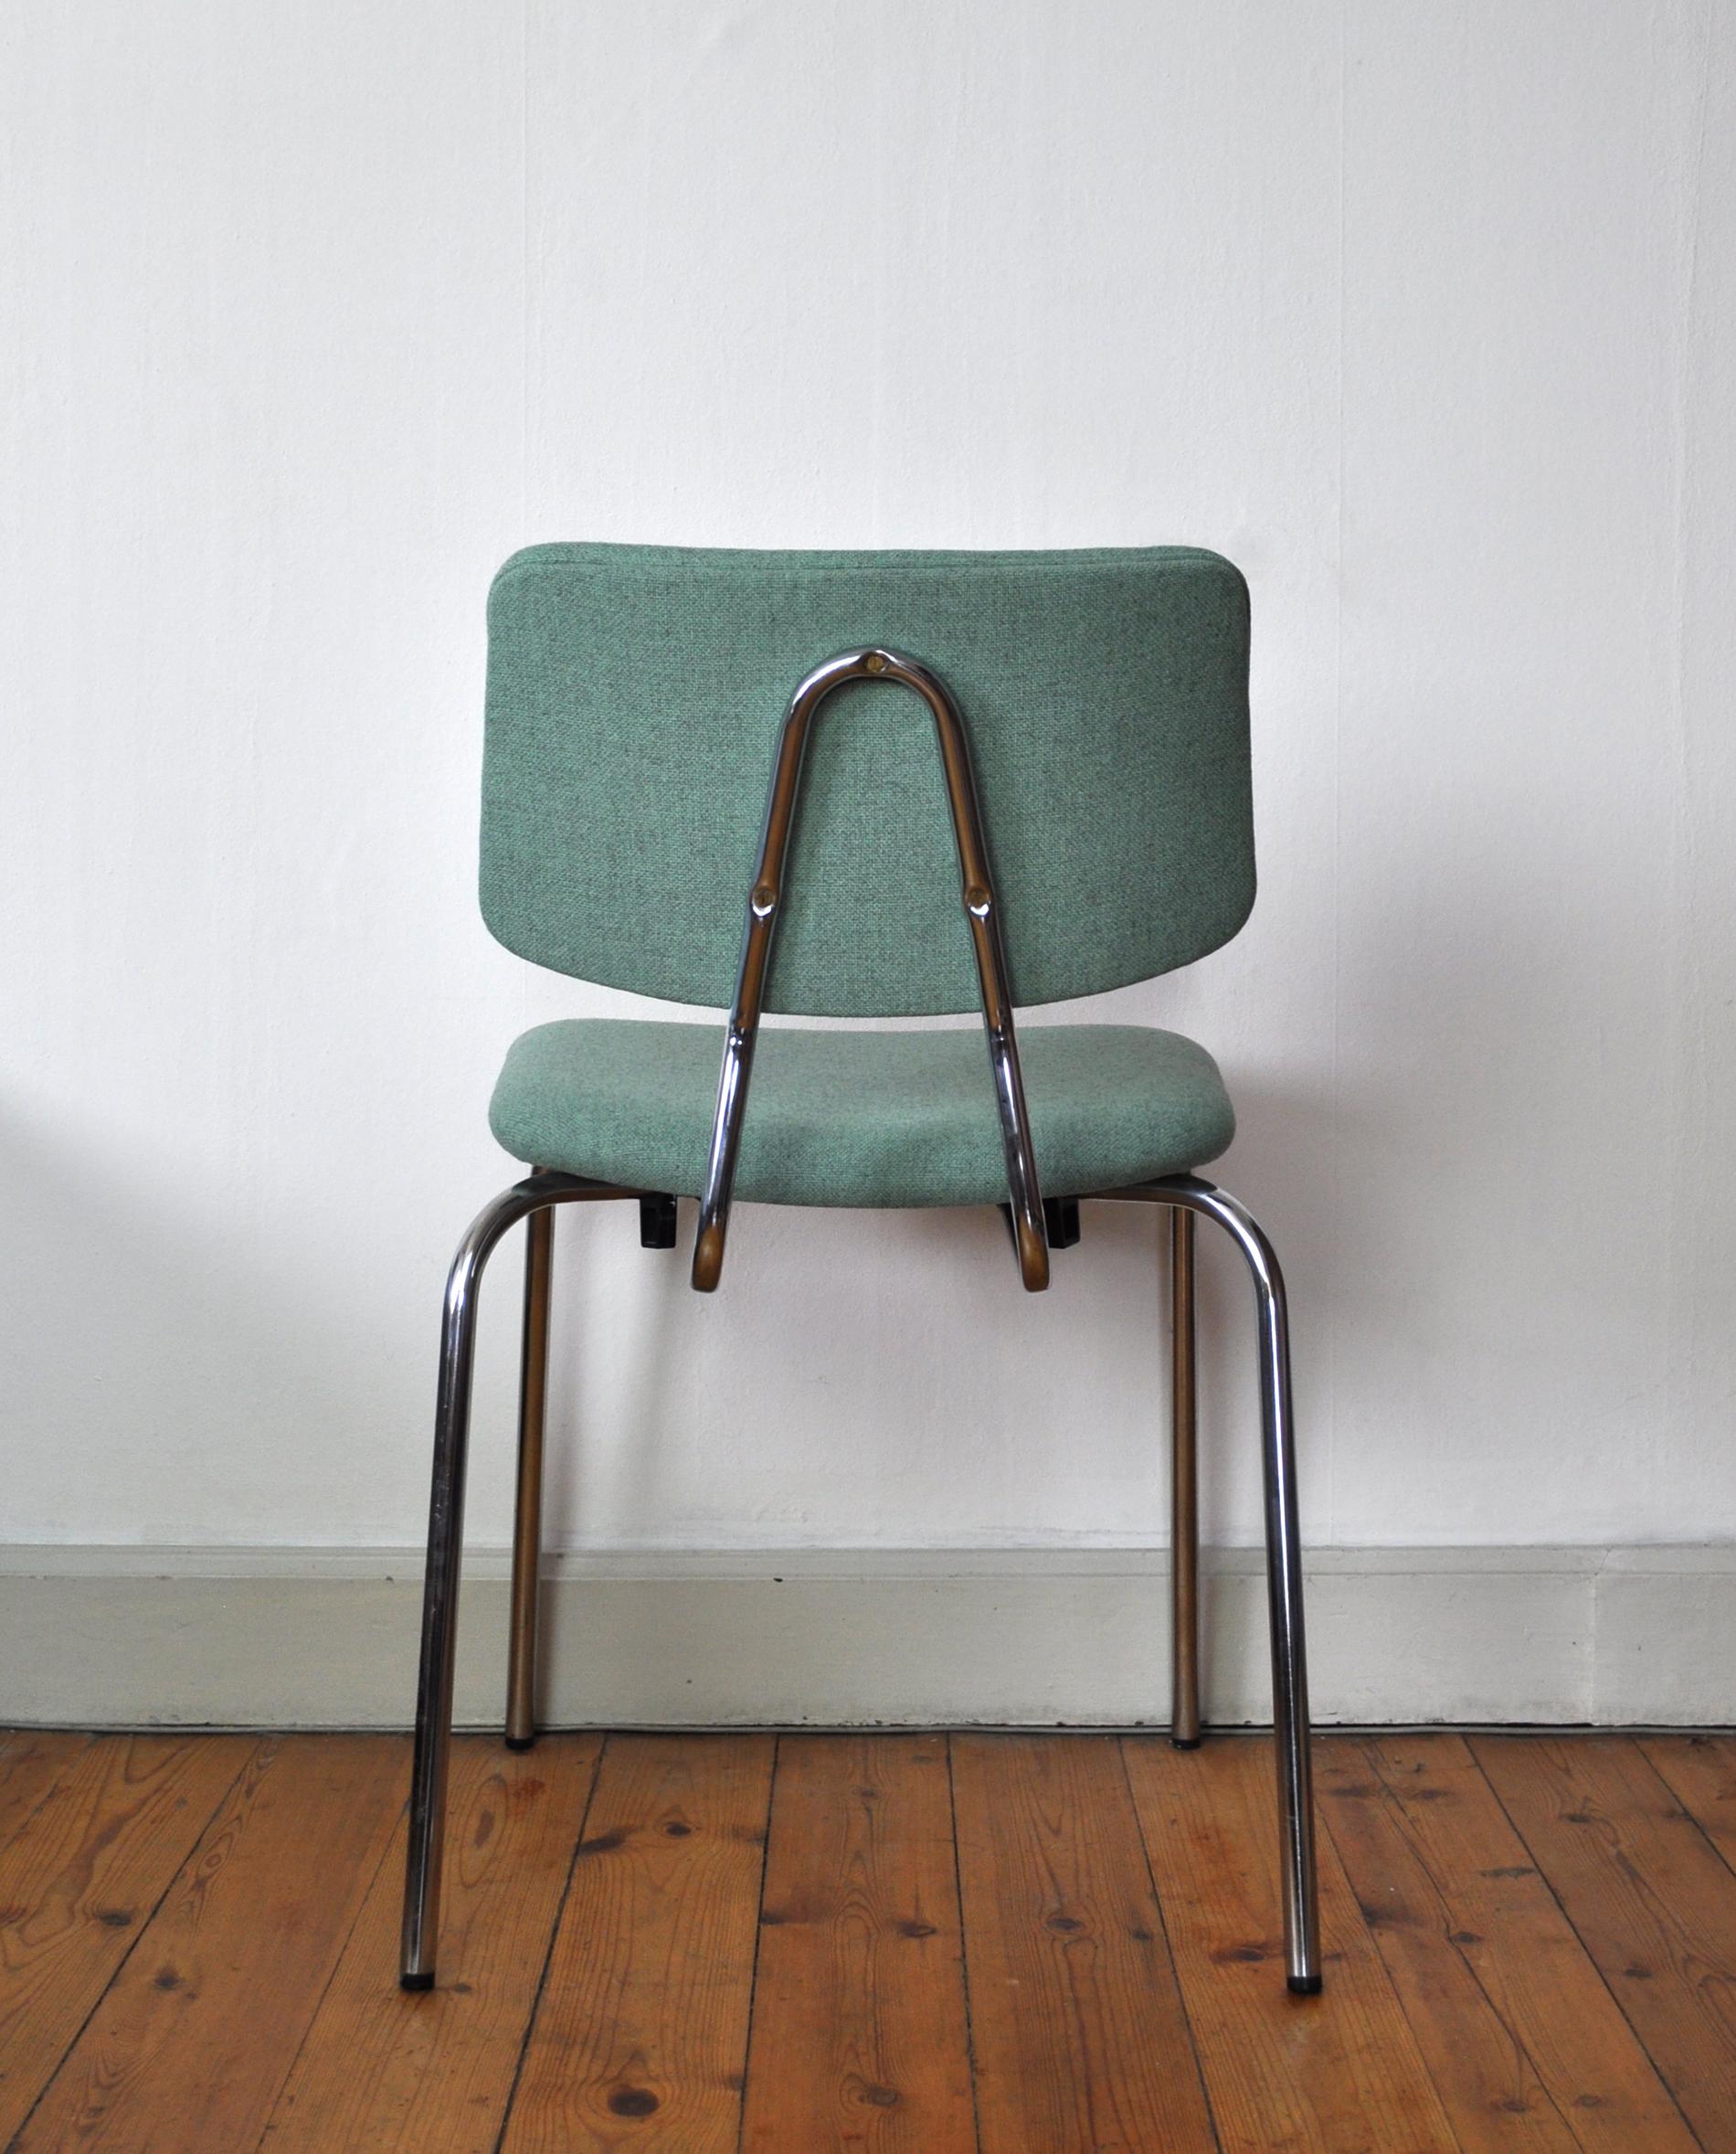 20th Century Danish Side Chair by Duba, Chromed Frame and New Kvadrat Upholstery